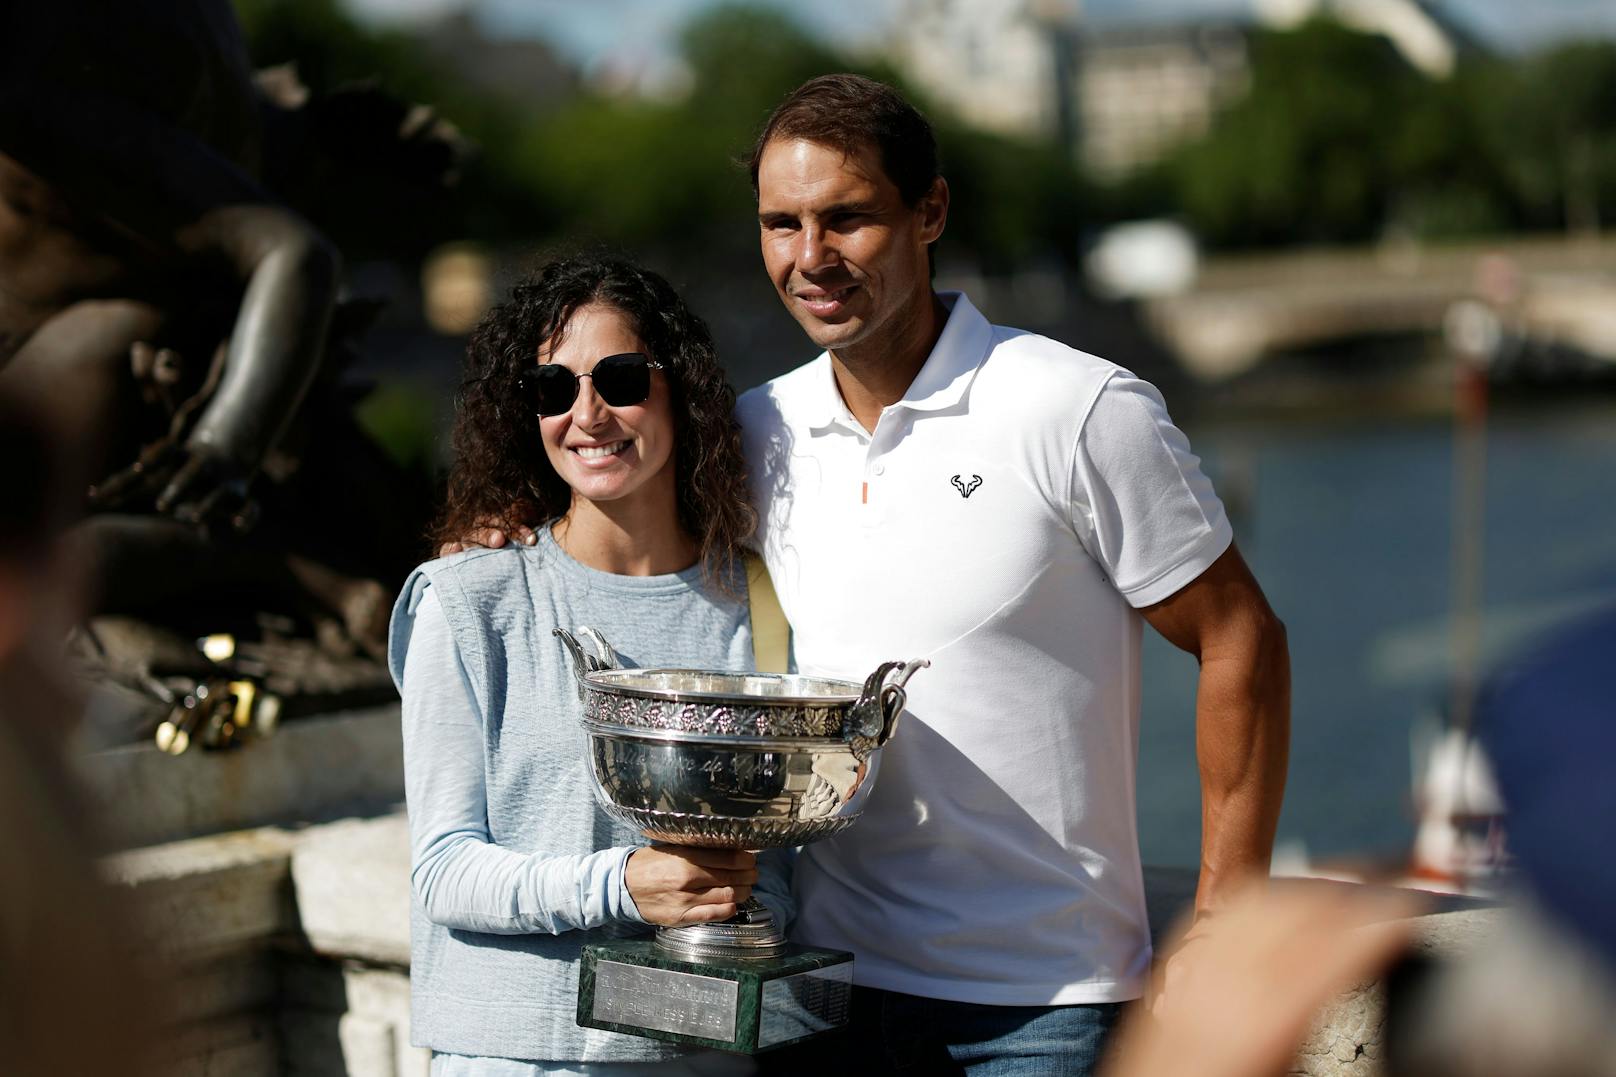 Tennis-Star Nadal ist Papa geworden – so heißt sein Sohn